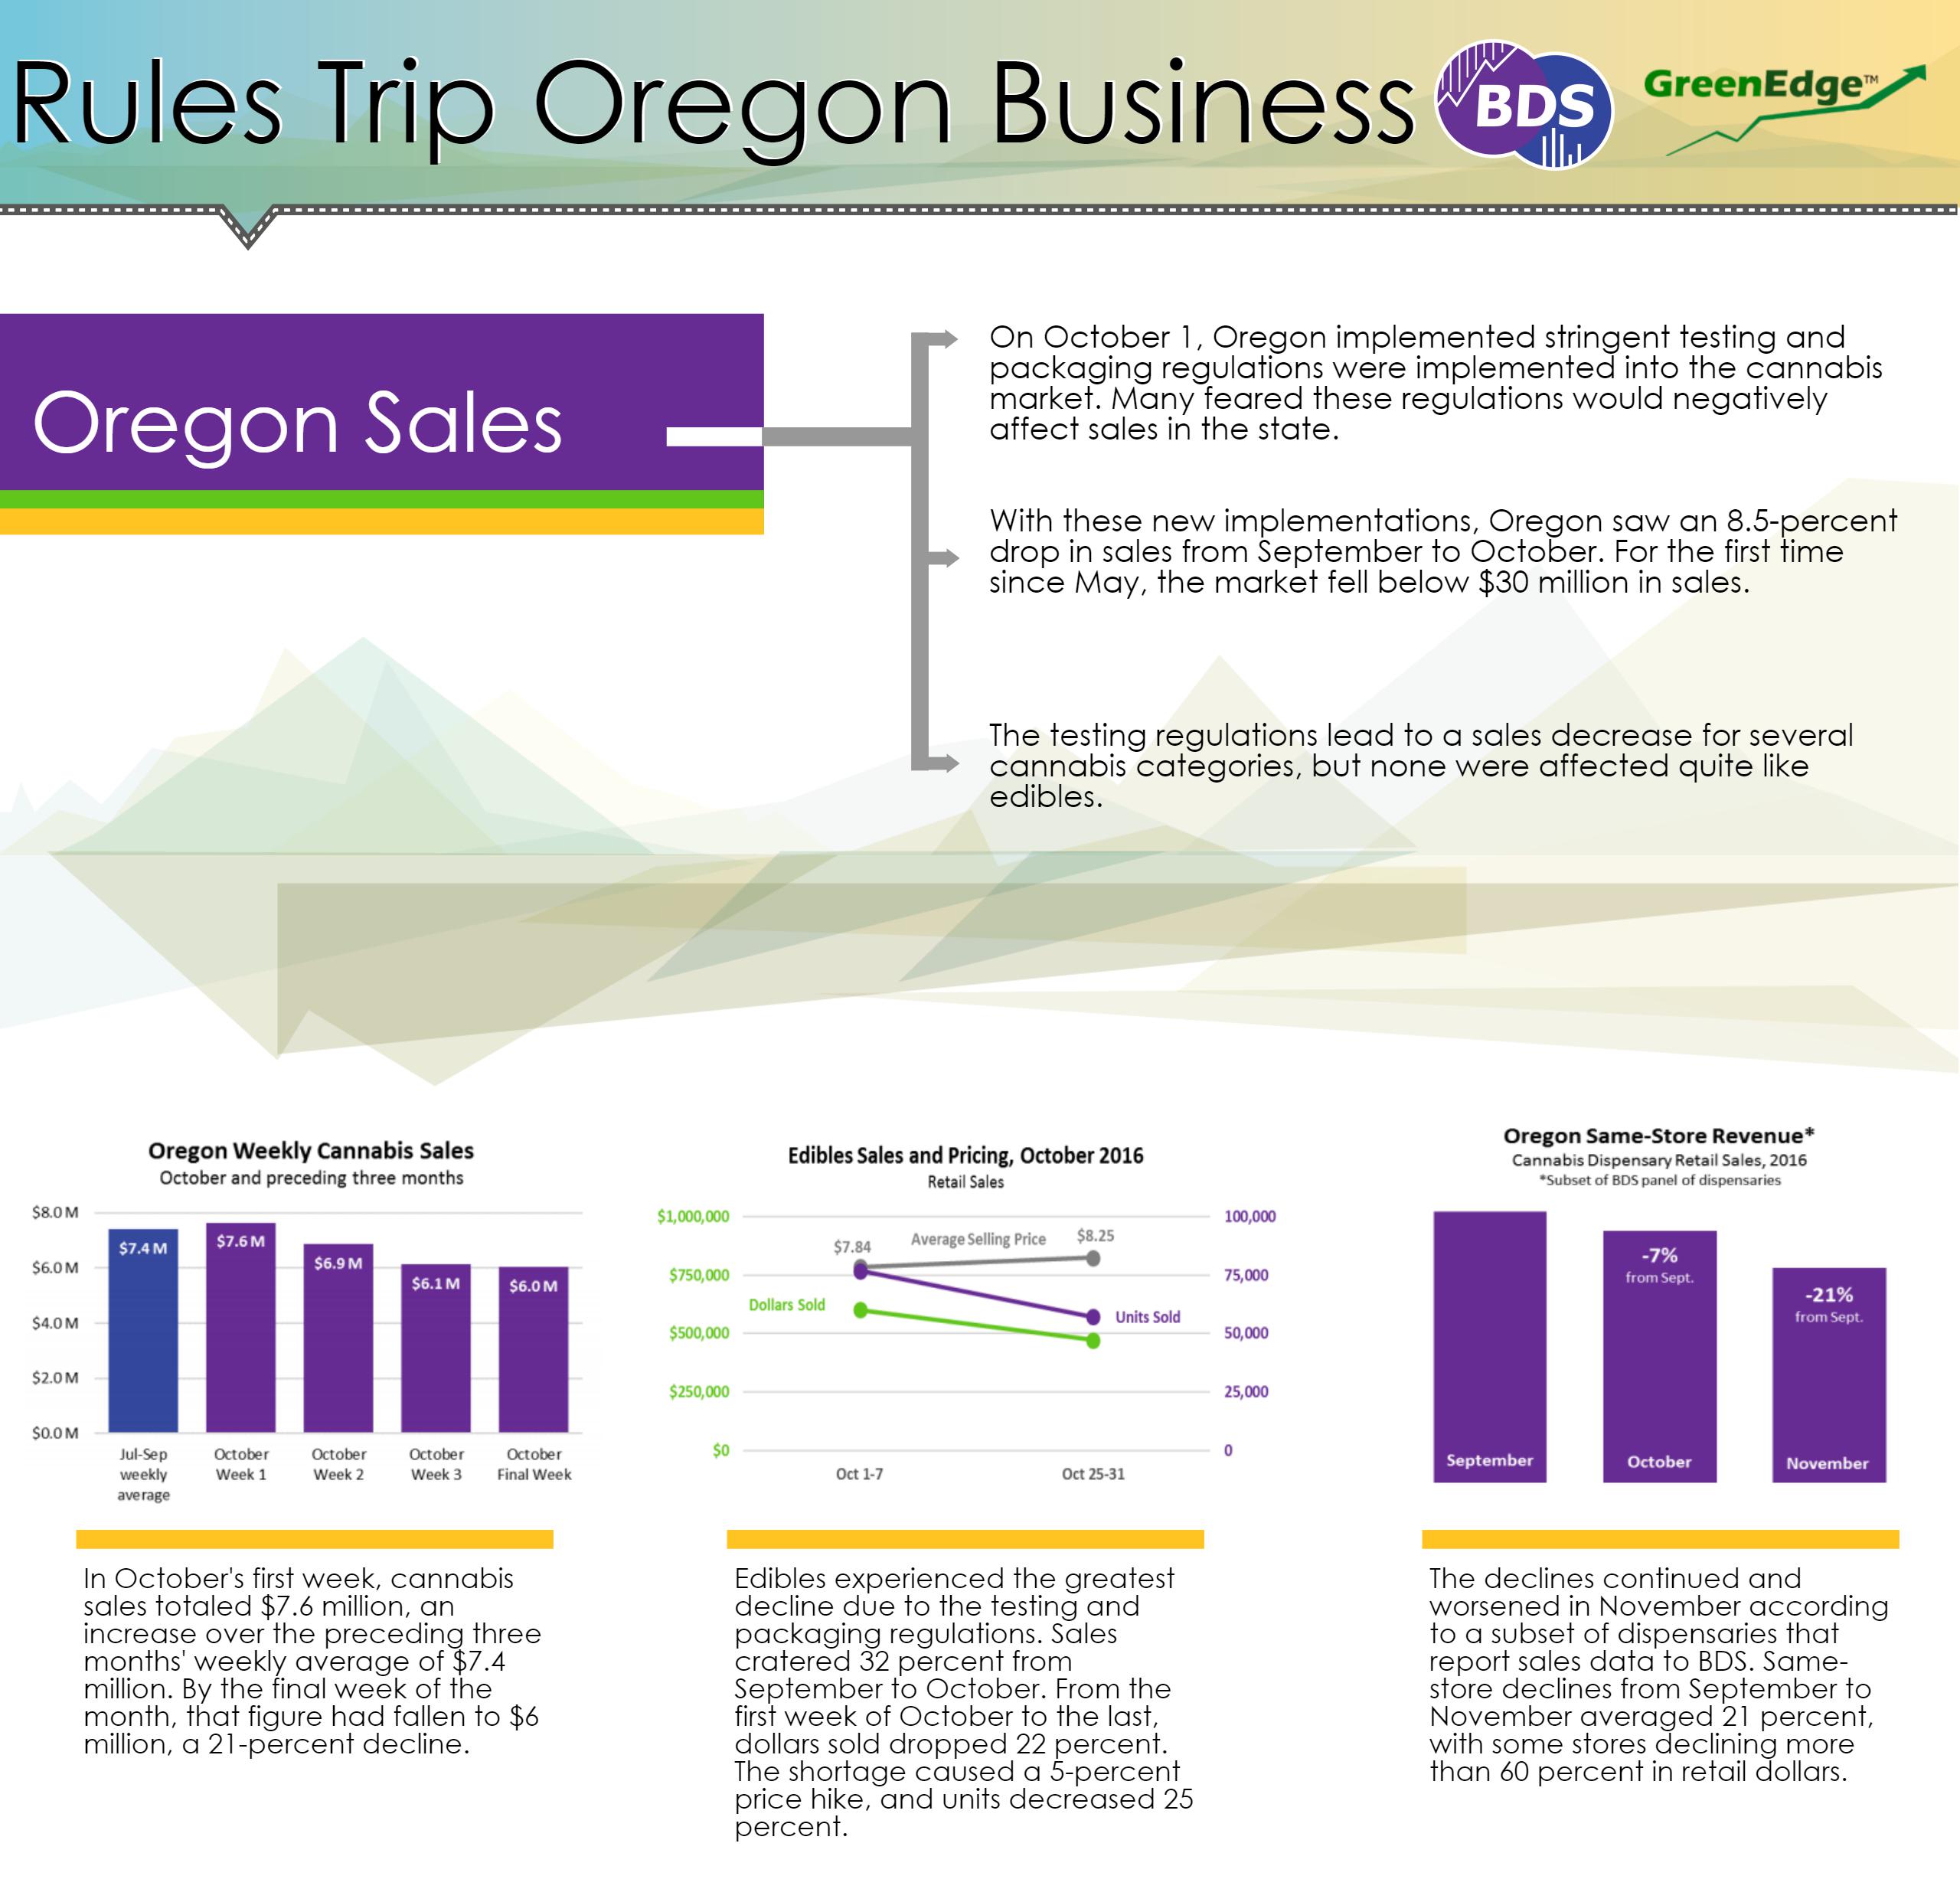 Oregon Regs Trip Business